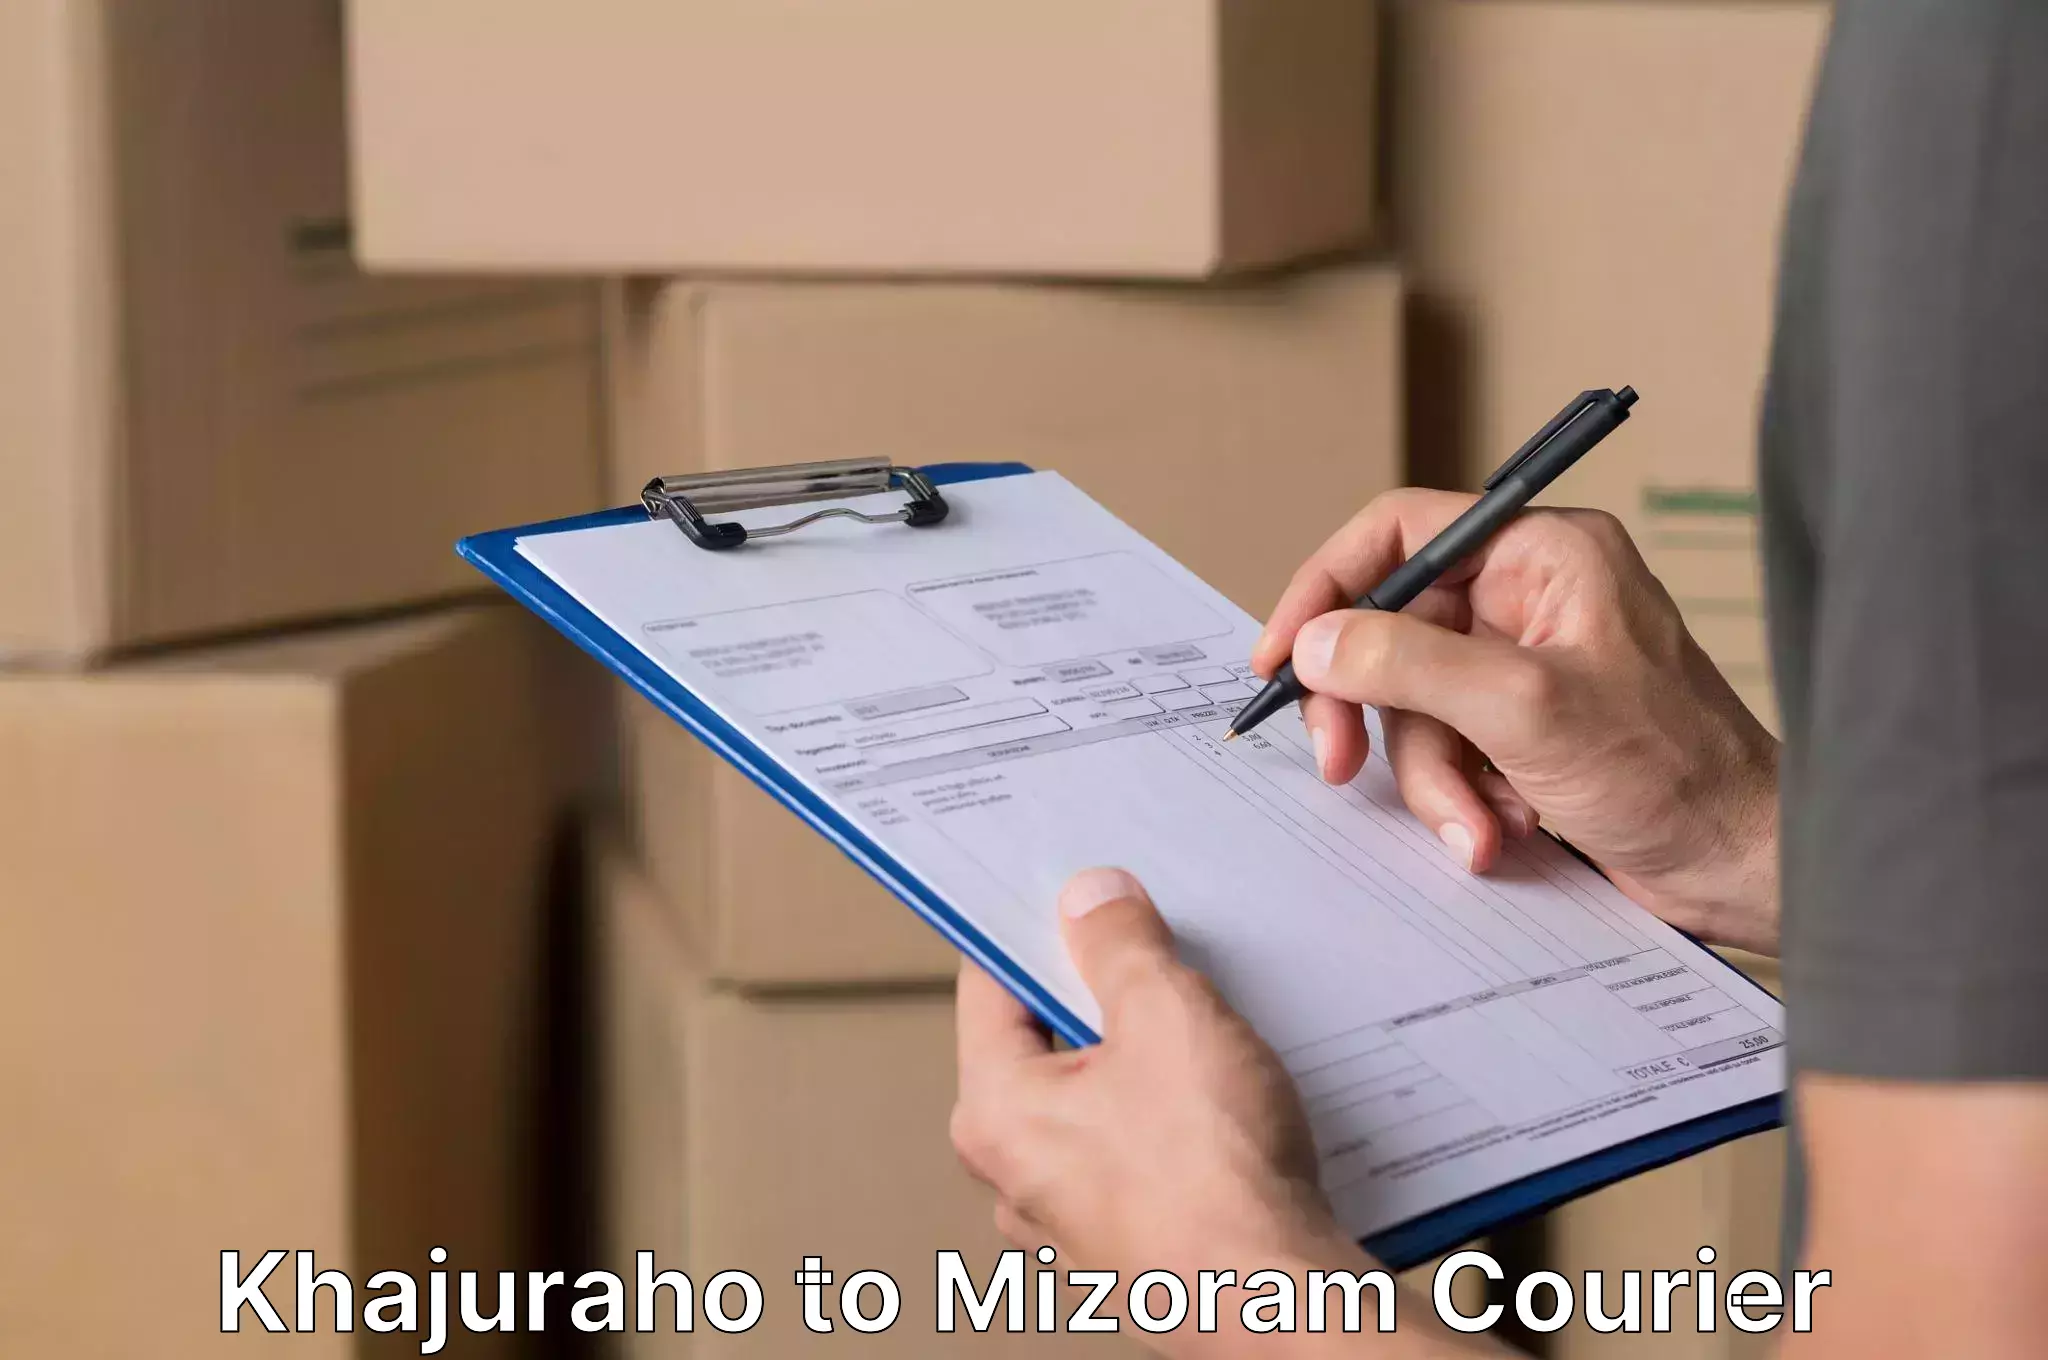 Furniture delivery service Khajuraho to Mizoram